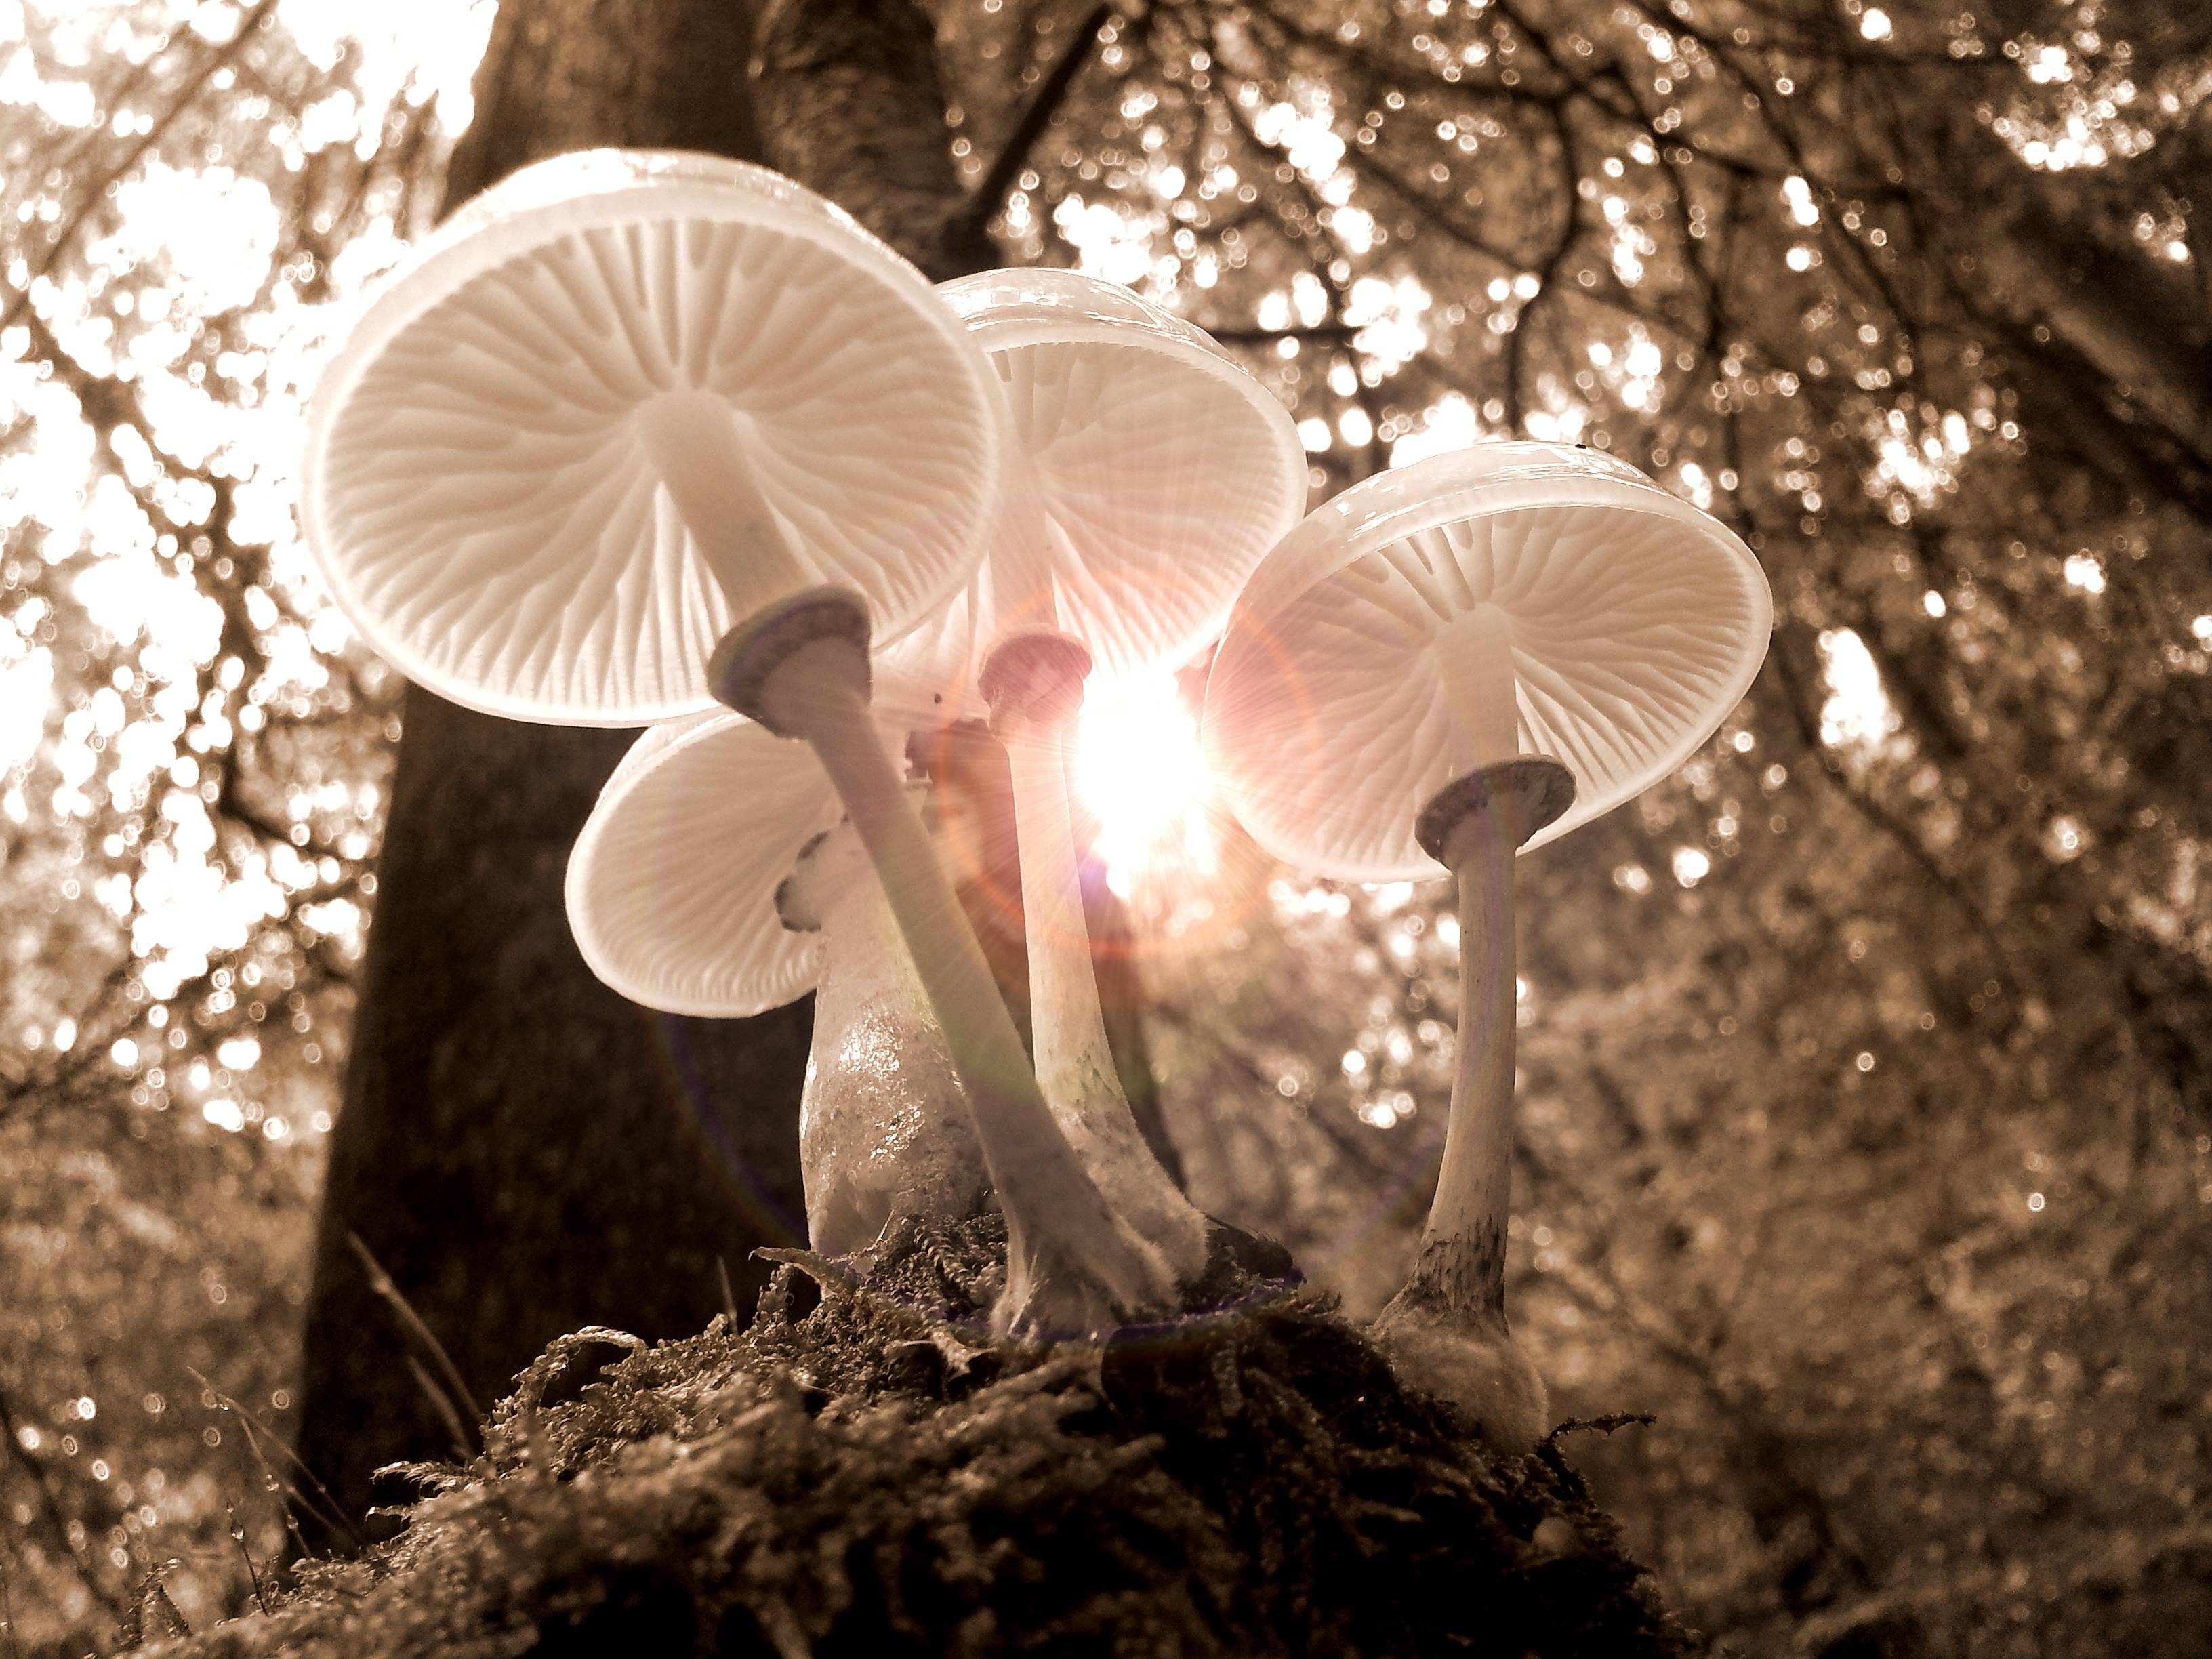 A group of mushrooms growing on the side - Mushroom